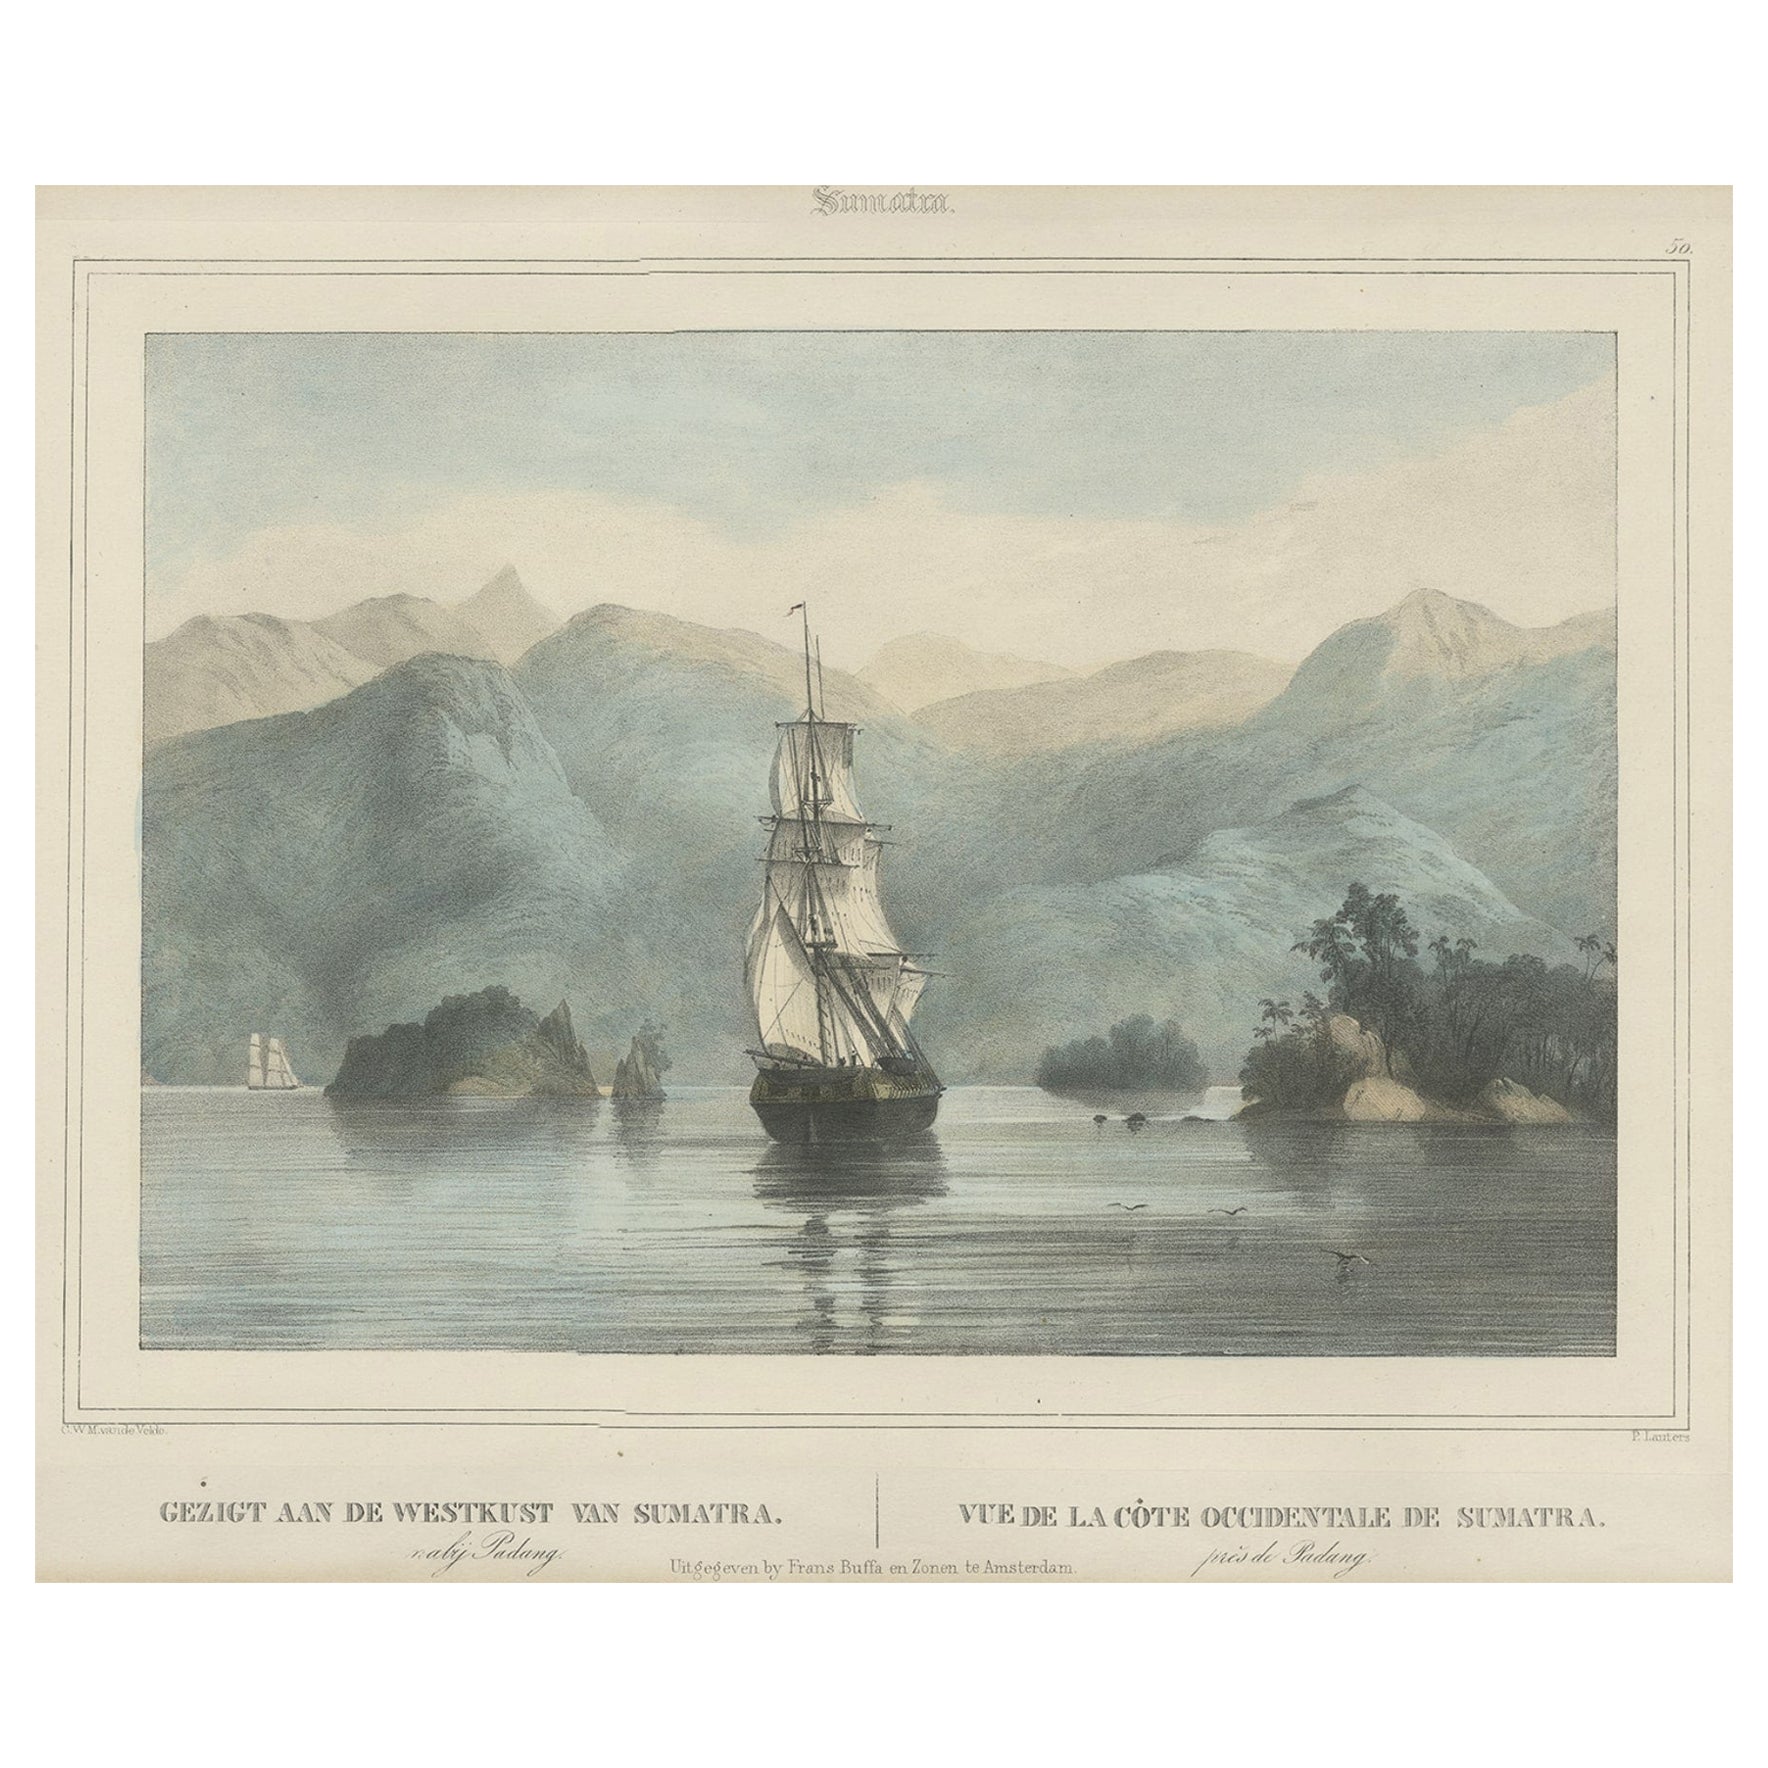 Antique Print of a Ship Near the Coast of Sumatra, Indonesia, c.1845